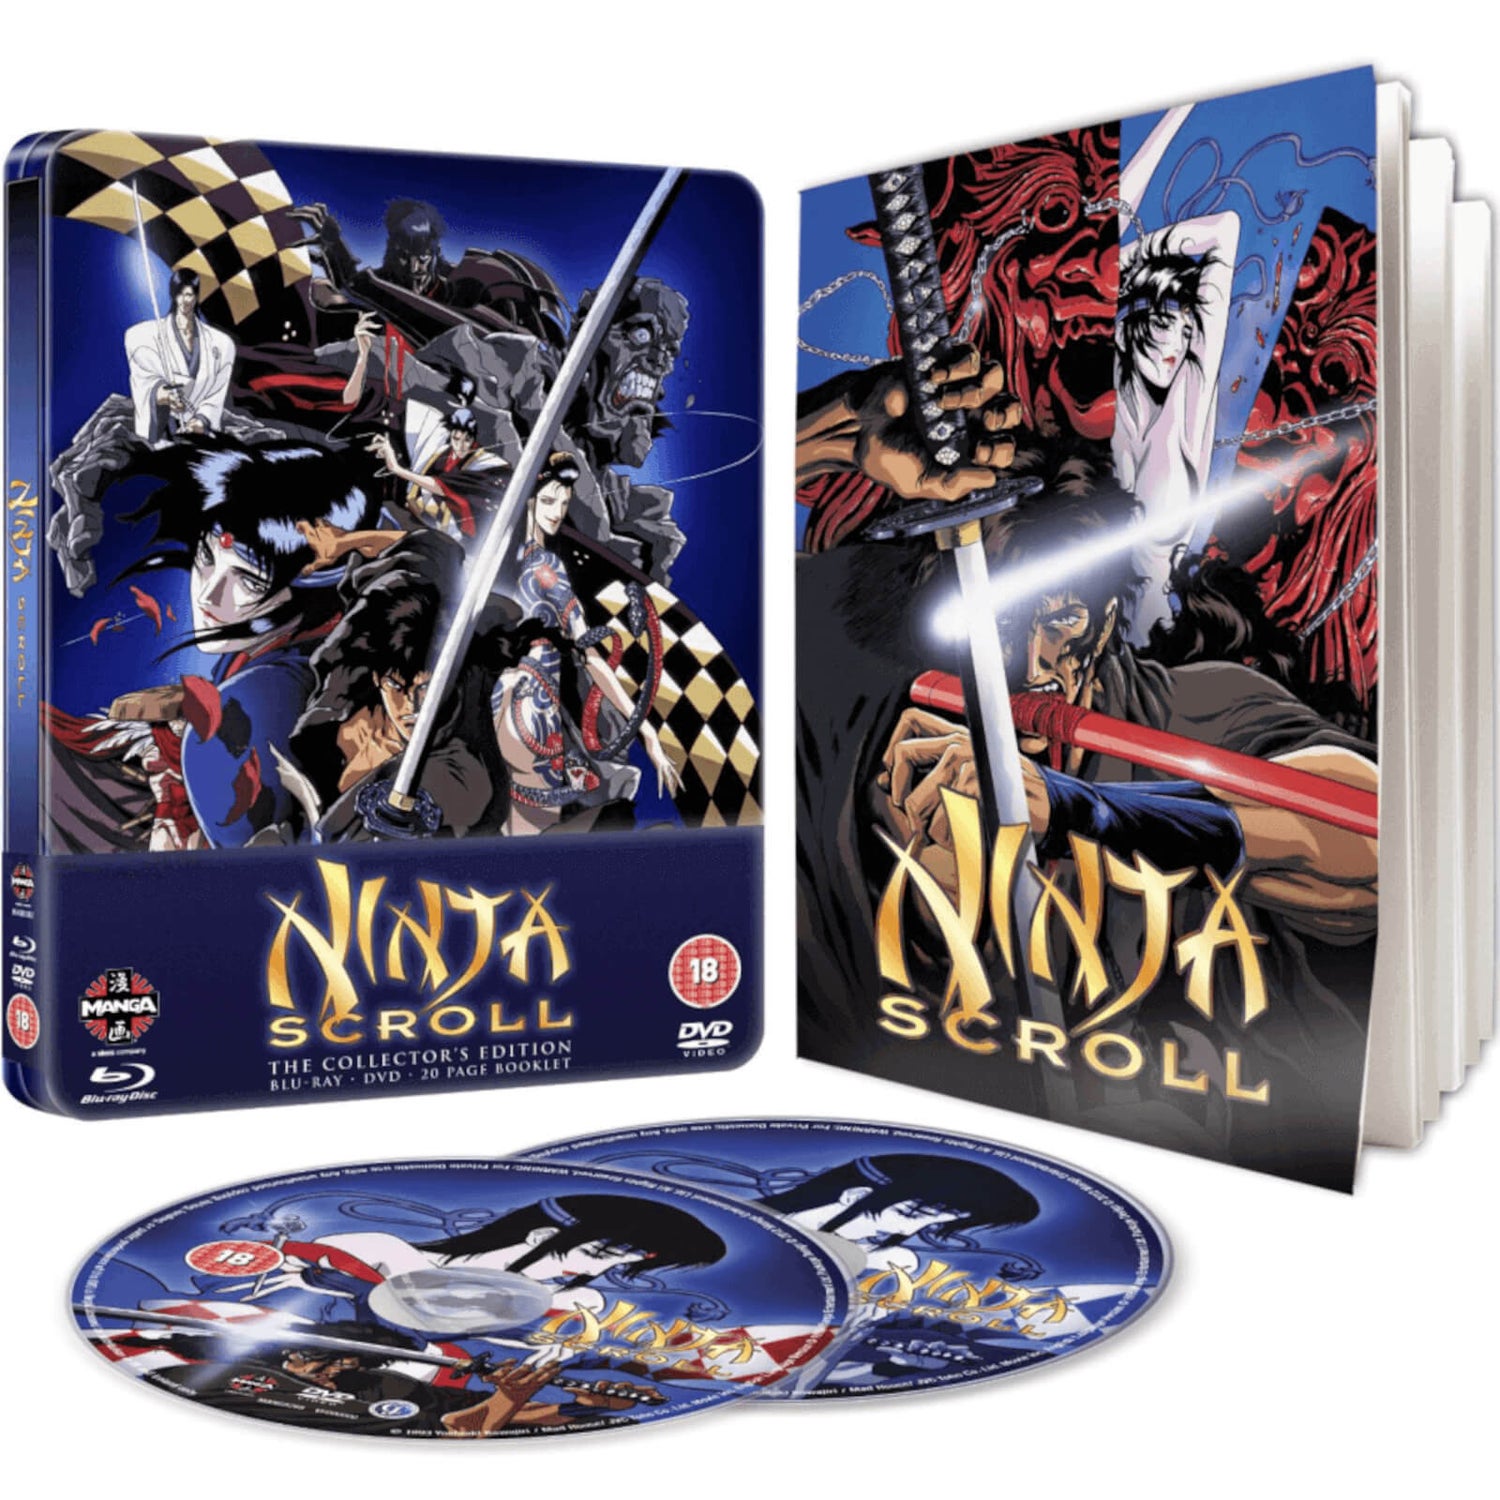 Ninja Scroll - Steelbook Edition (Blu-Ray and DVD) (UK EDITION)